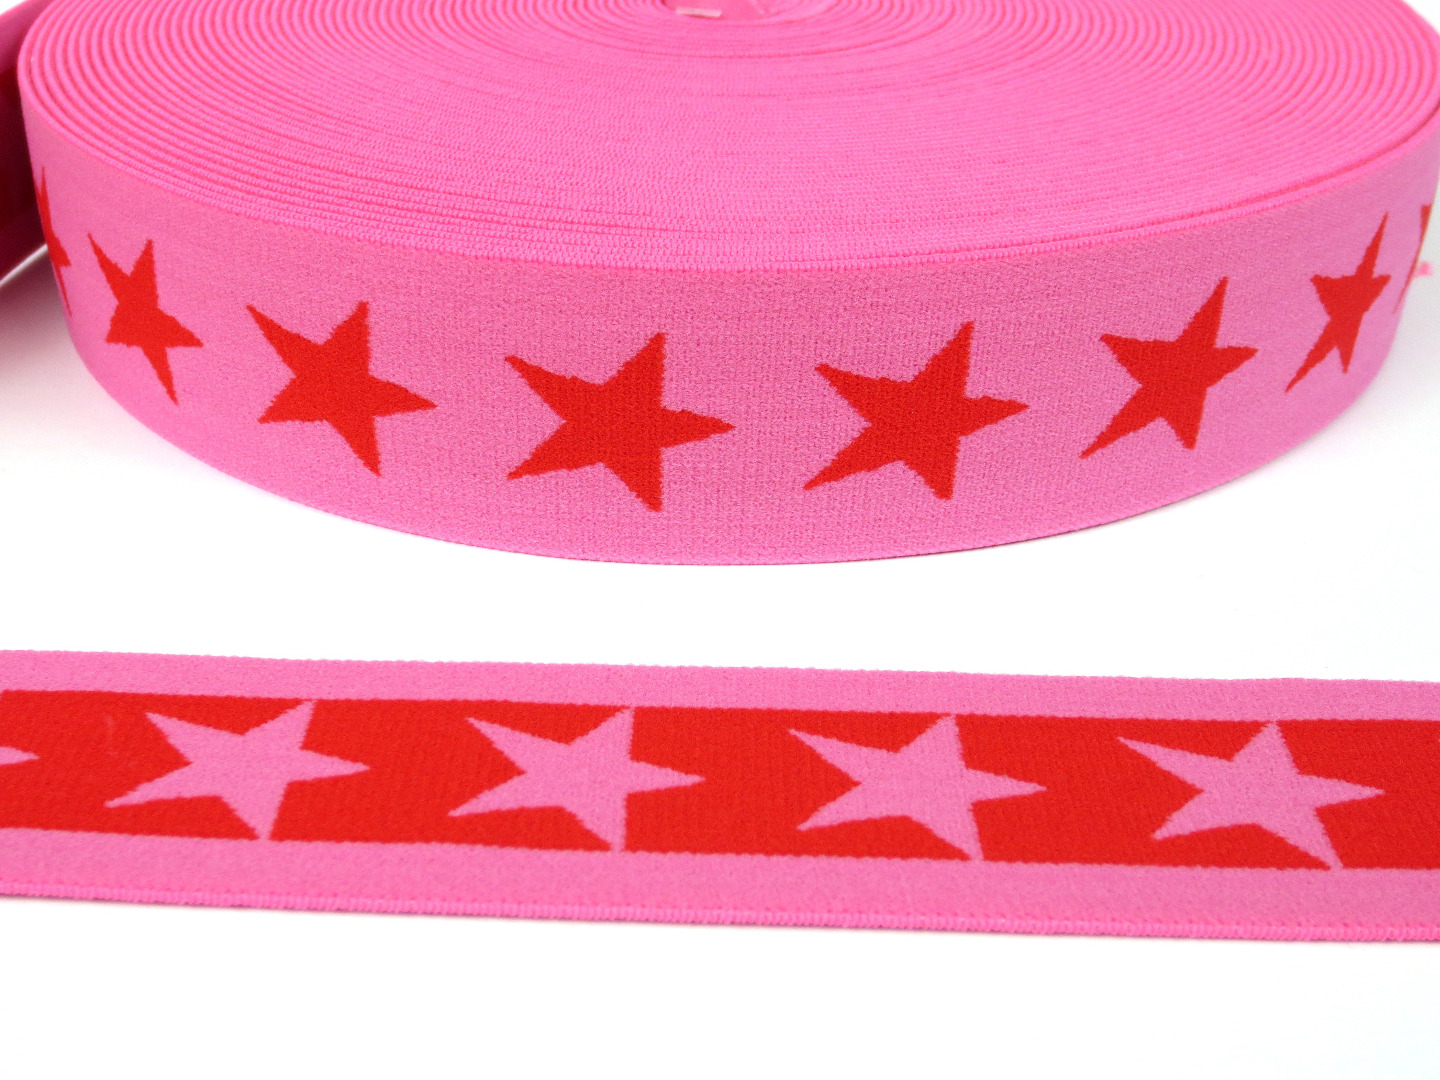 Gummiband Sterne - pink-rot - 4 cm Breit